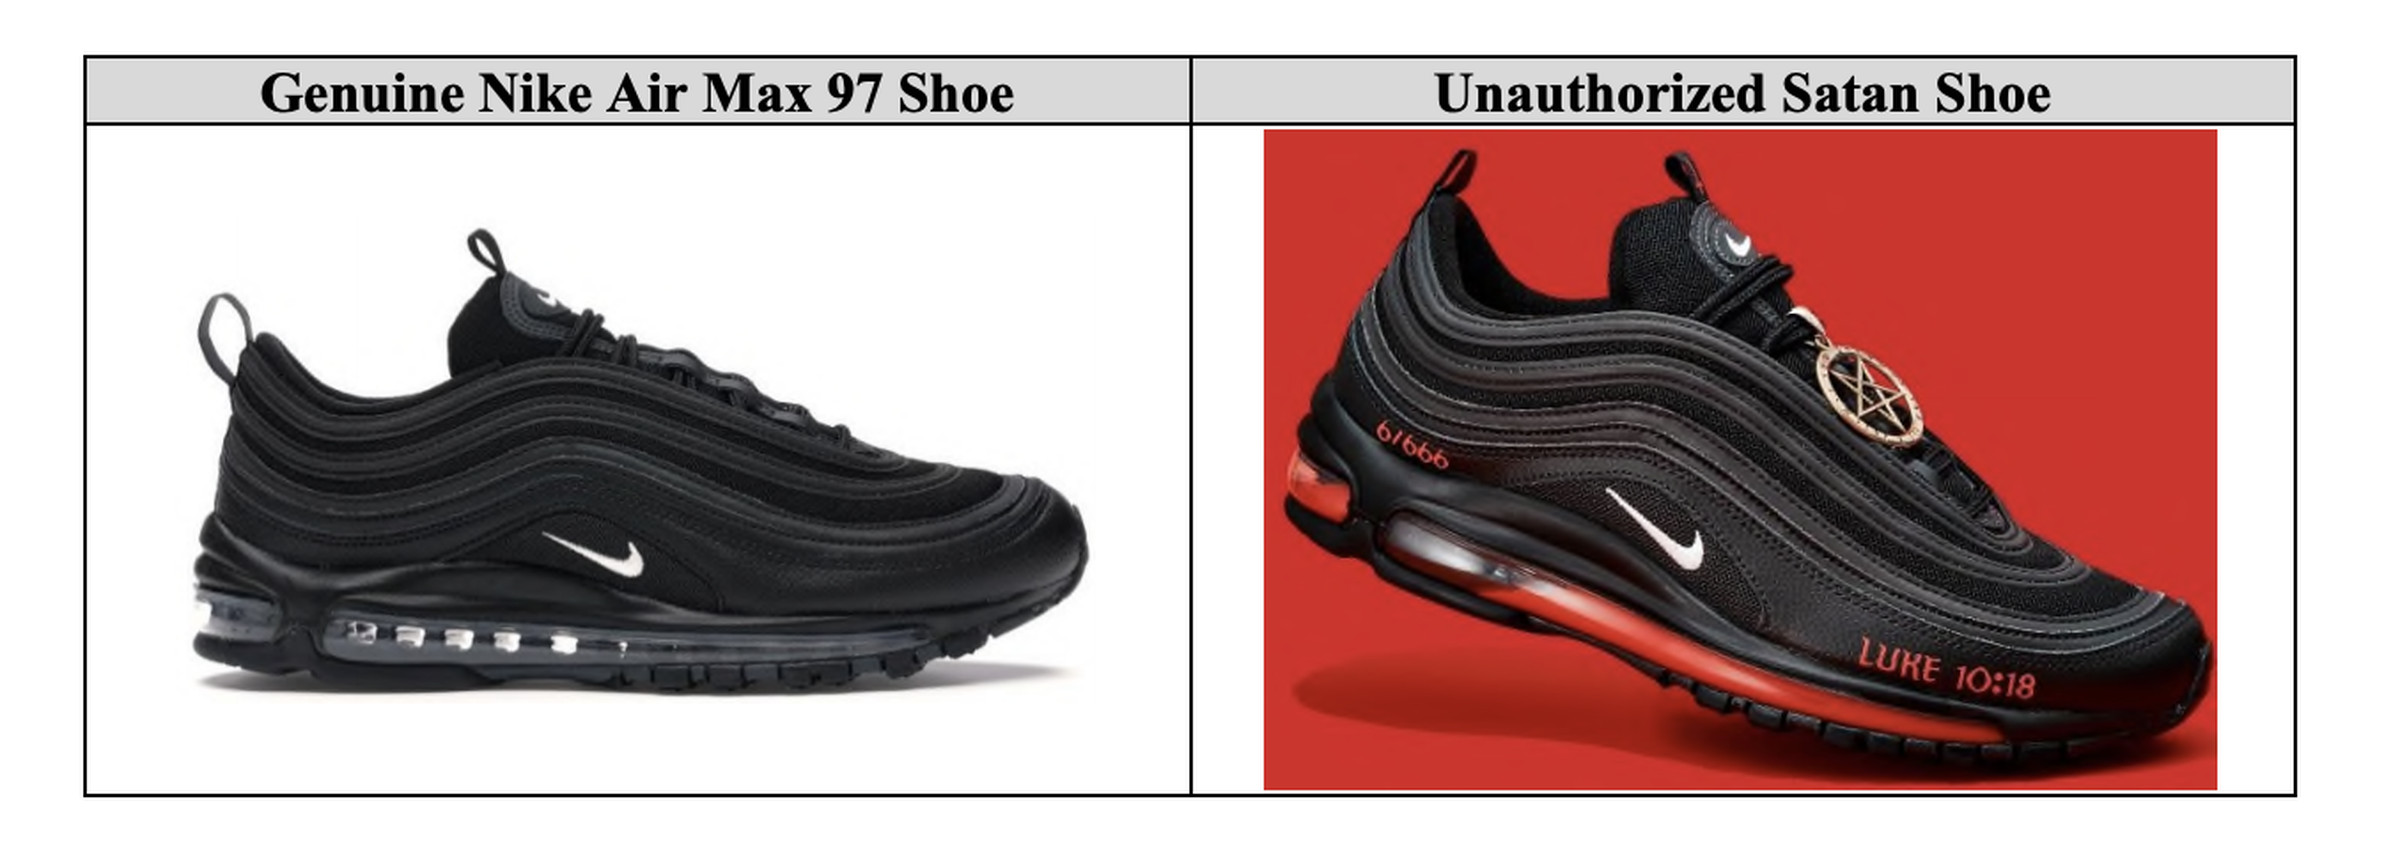 Nike’s legal exhibit distinguishing standard Nike shoe from “unauthorized Satan Shoe”